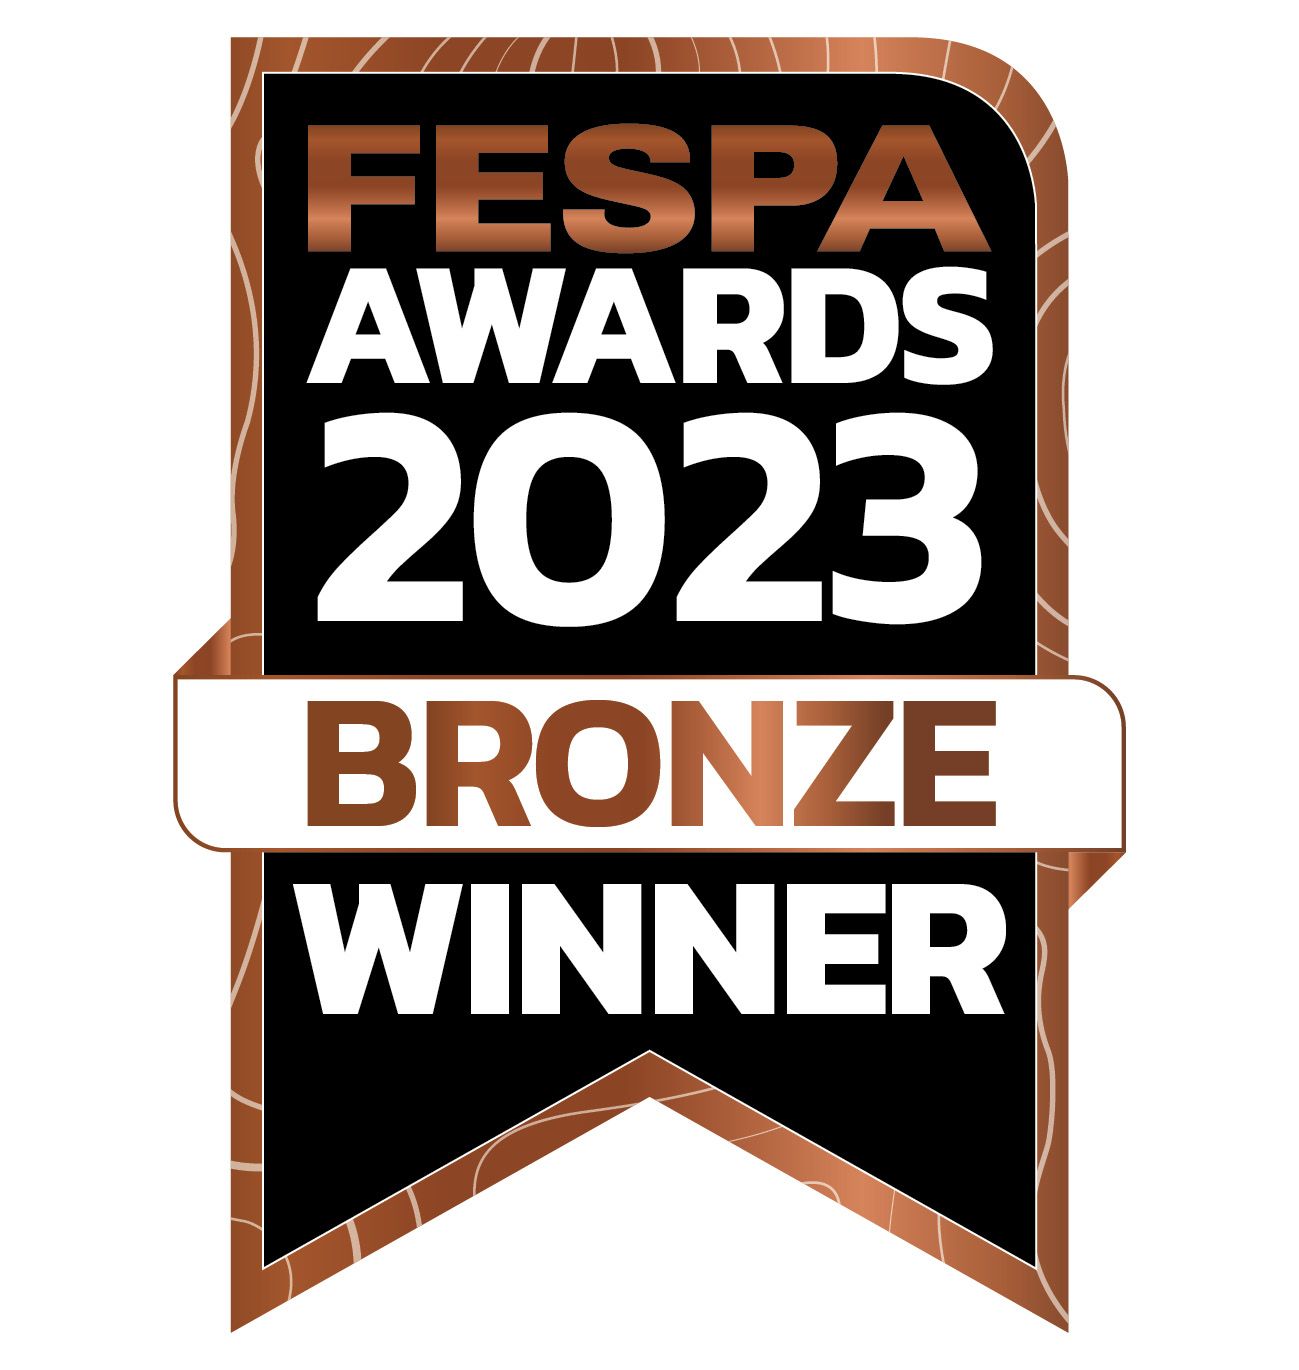 FESPA Awards Winner Bronze